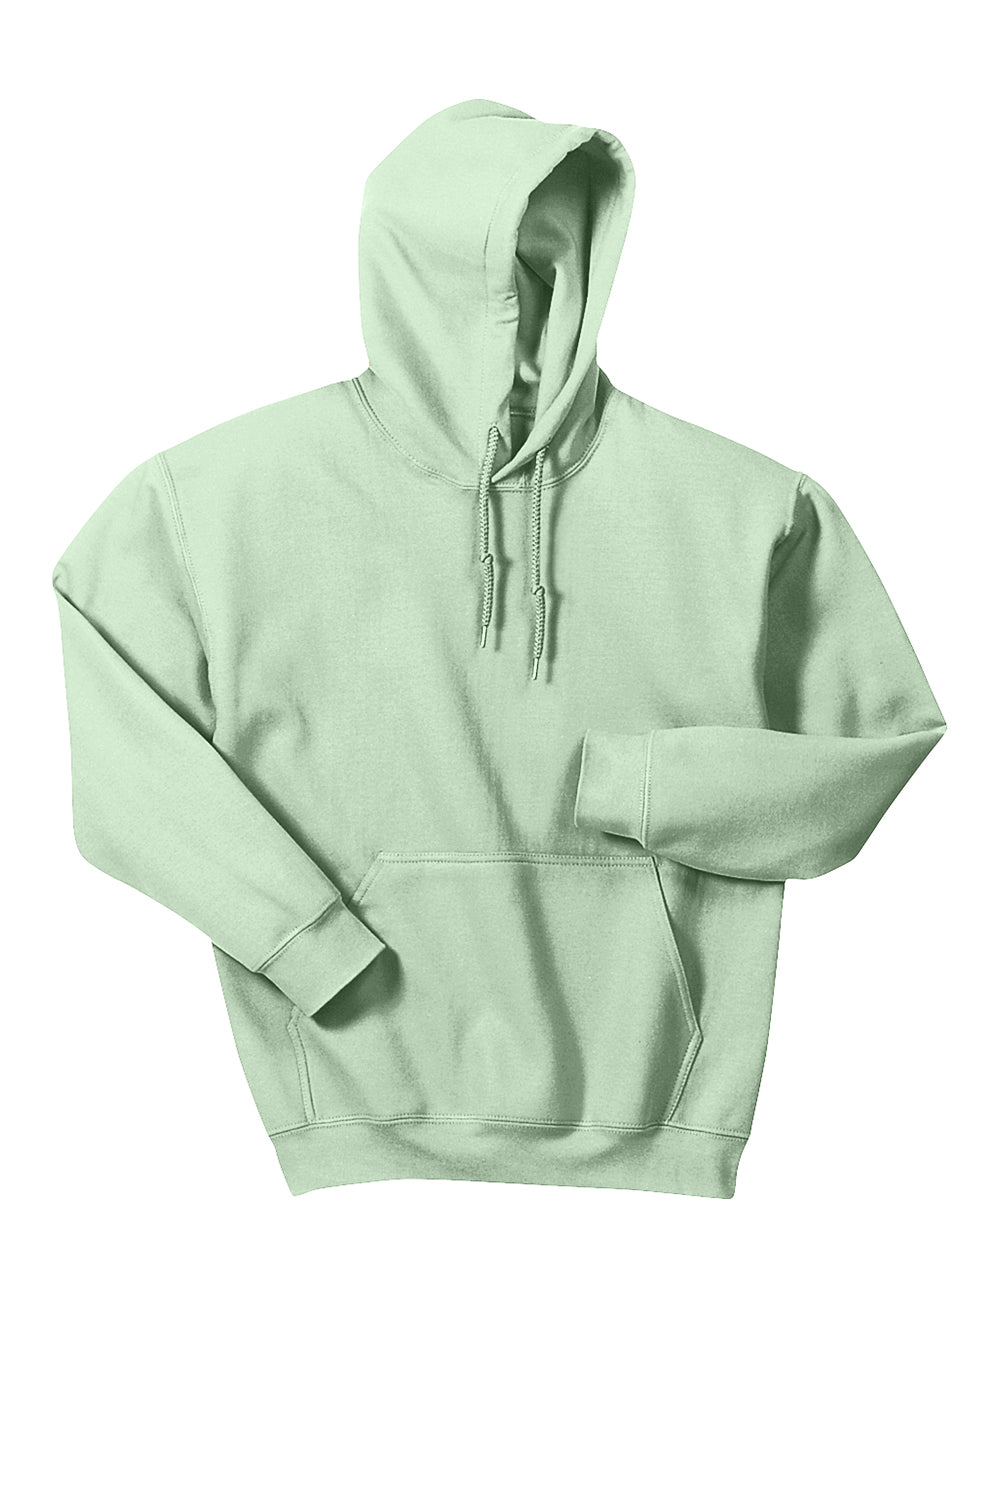 Gildan Mens Hooded Sweatshirt Hoodie Mint Green Flat Front